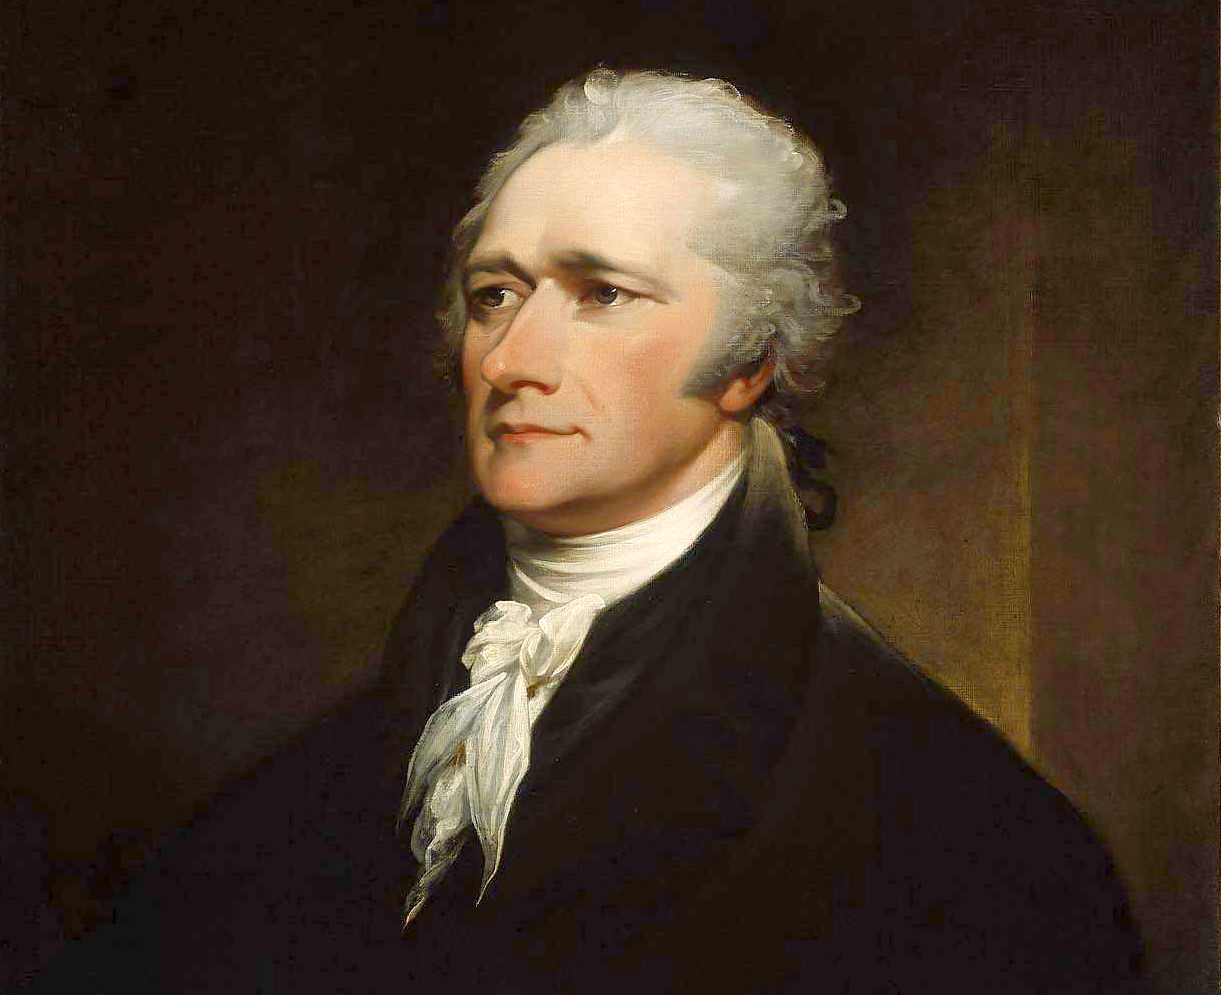 Portrait of Alexander Hamilton with a quiet smile, wearing dark robes.